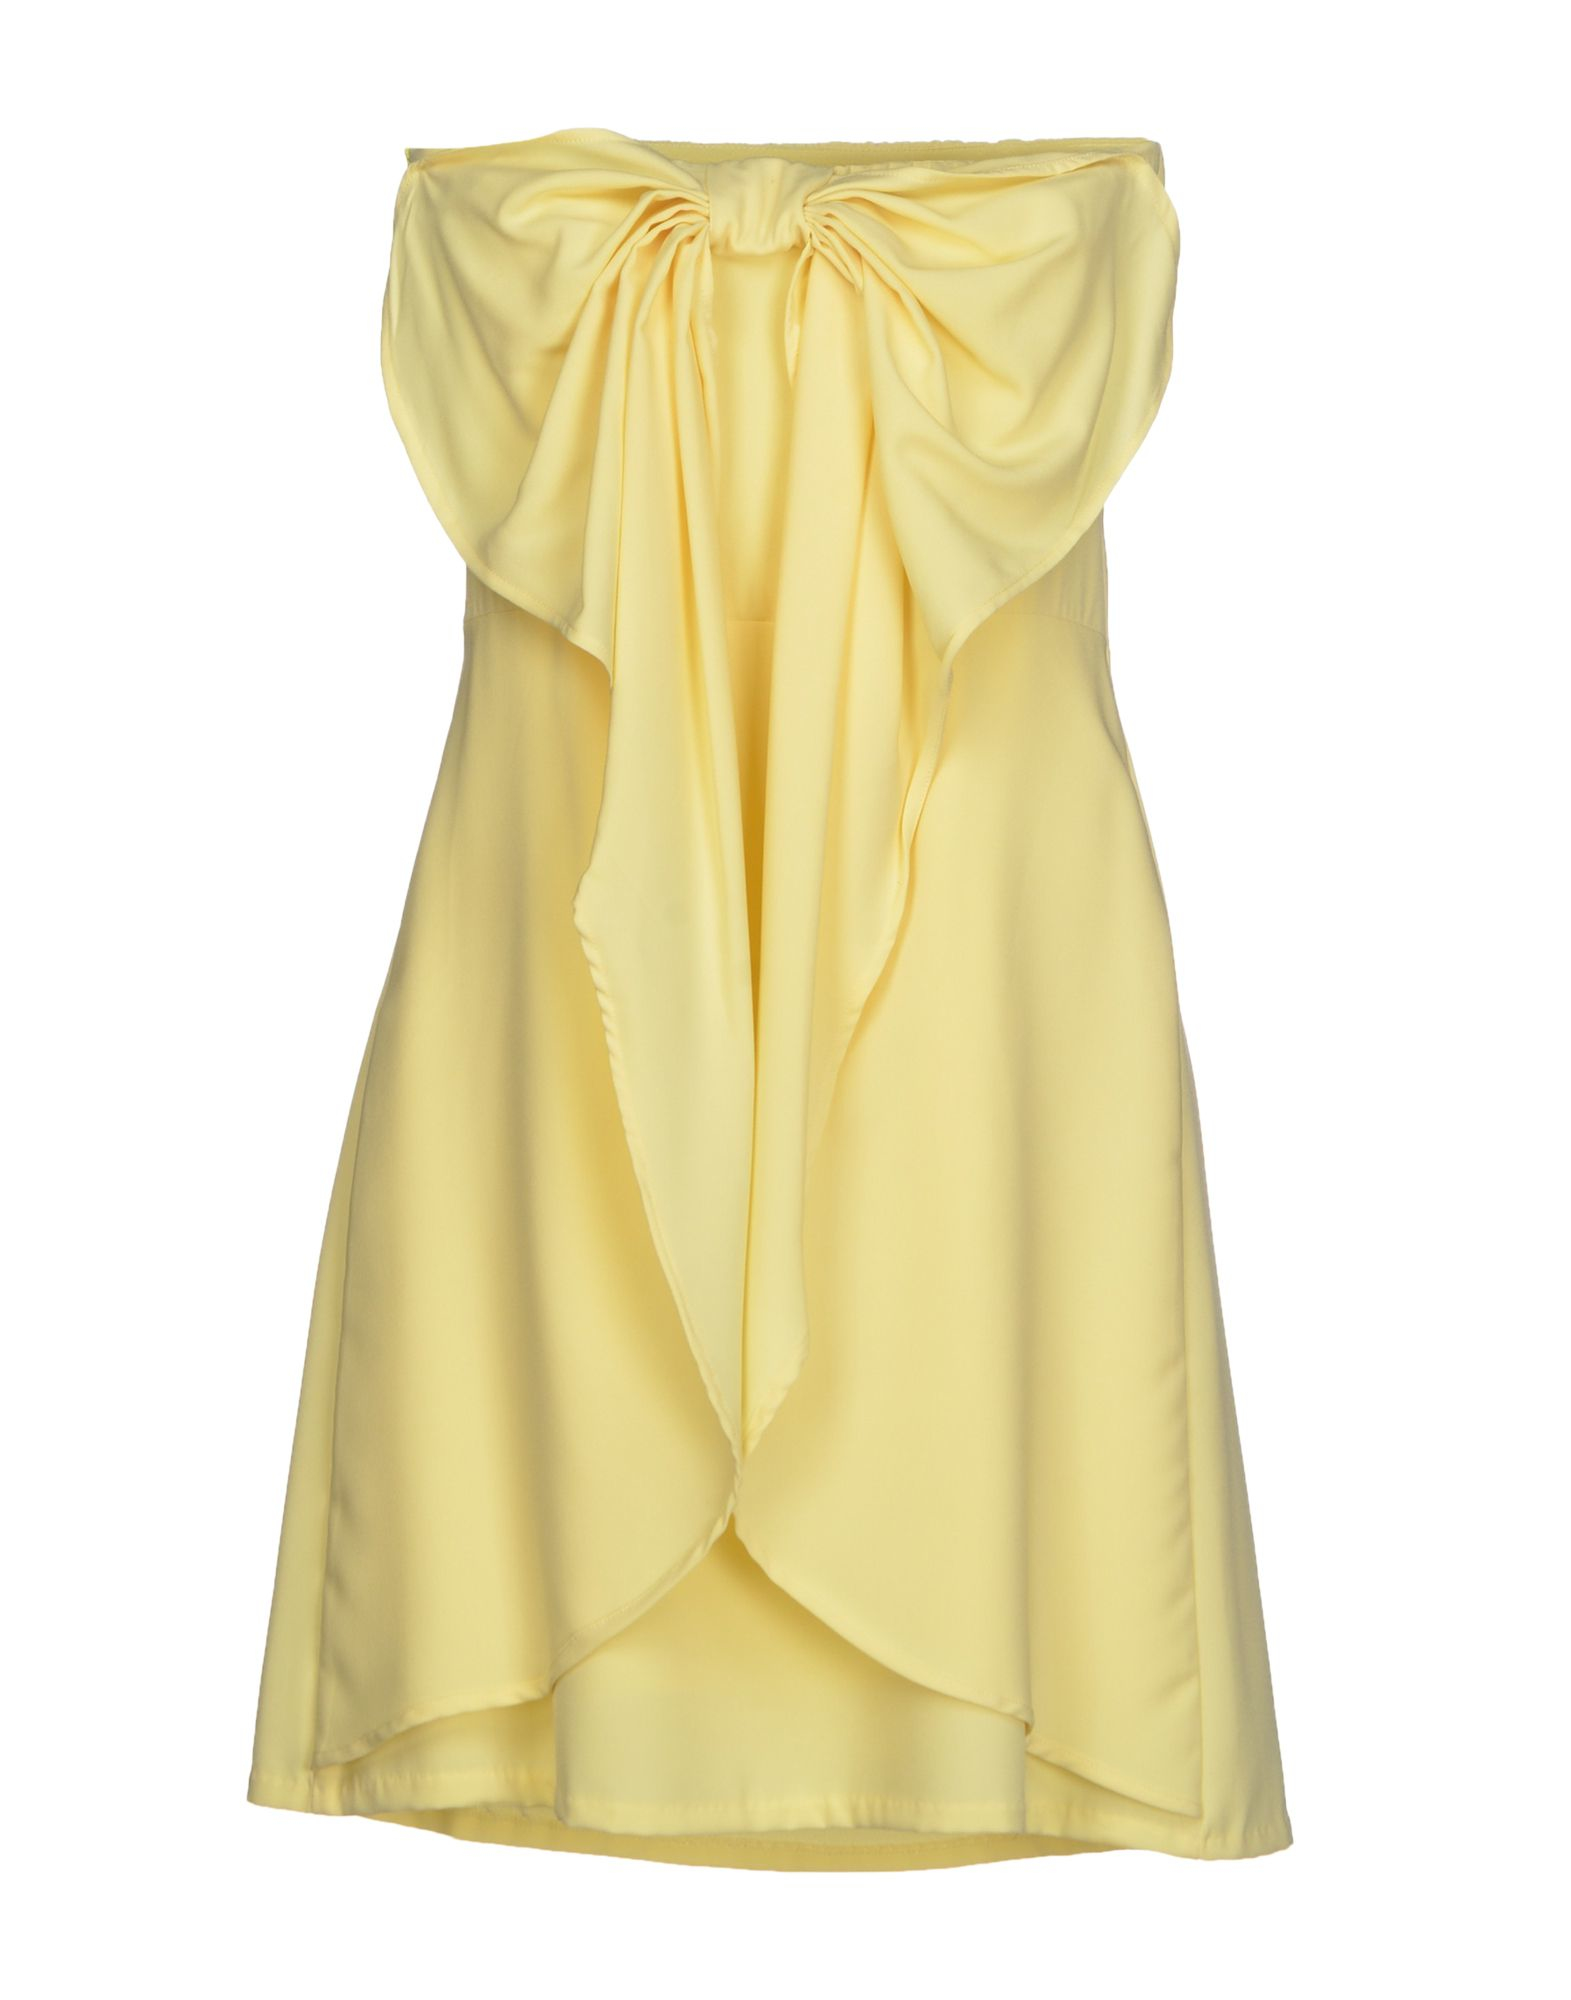 Lyst - Maison espin Short Dress in Yellow